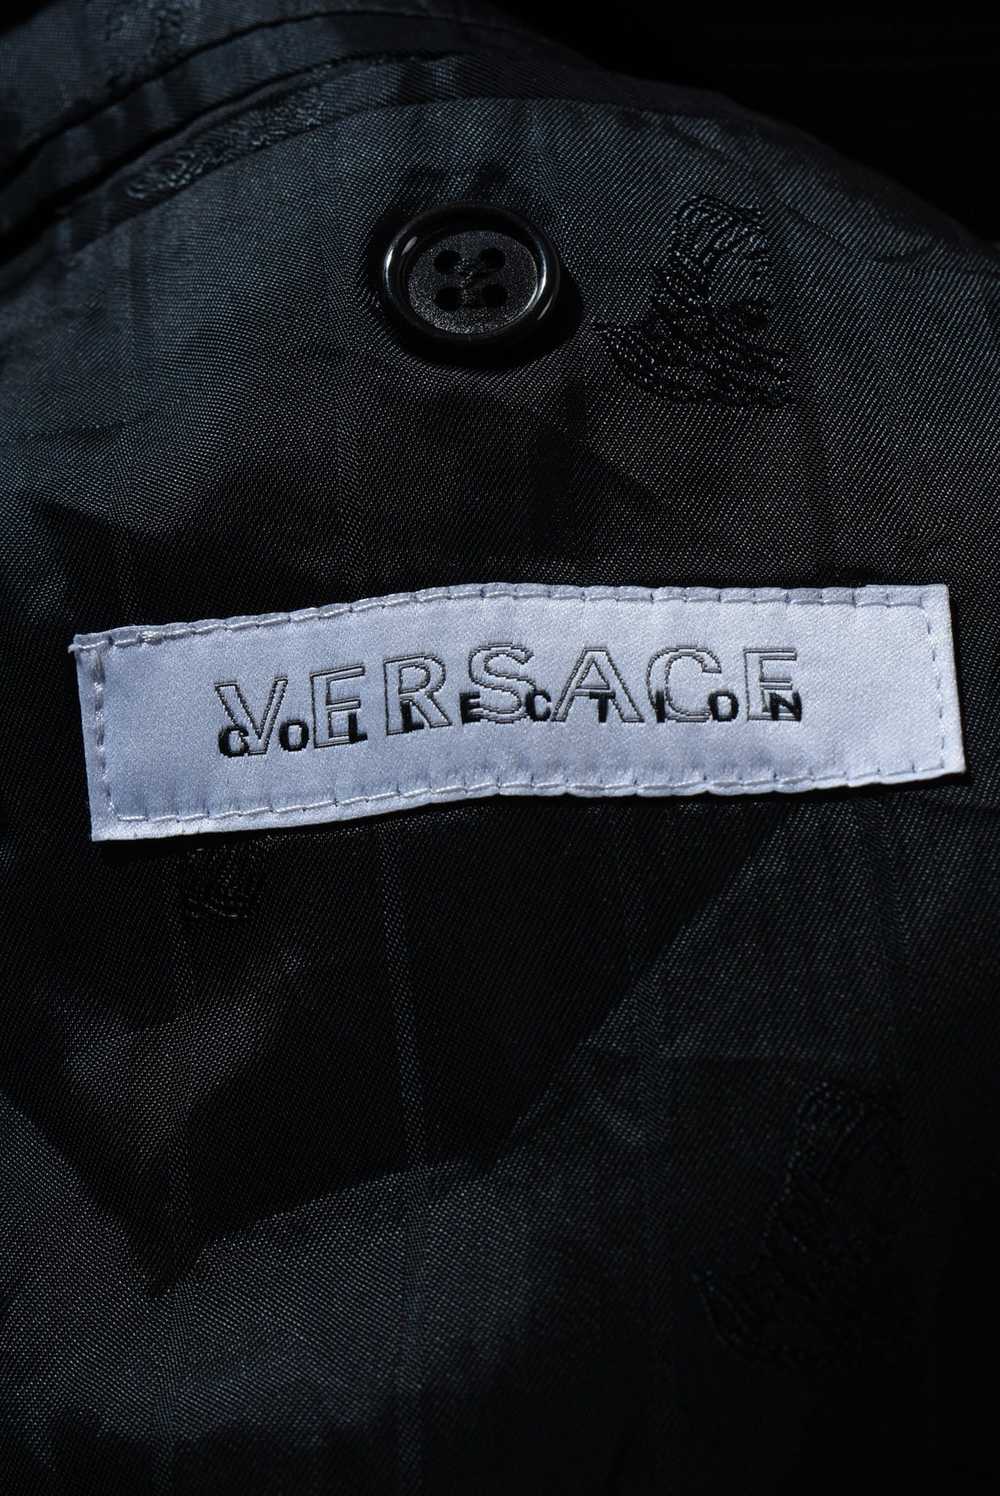 Versace Versace Collection Classic Blazer Jacket - image 3